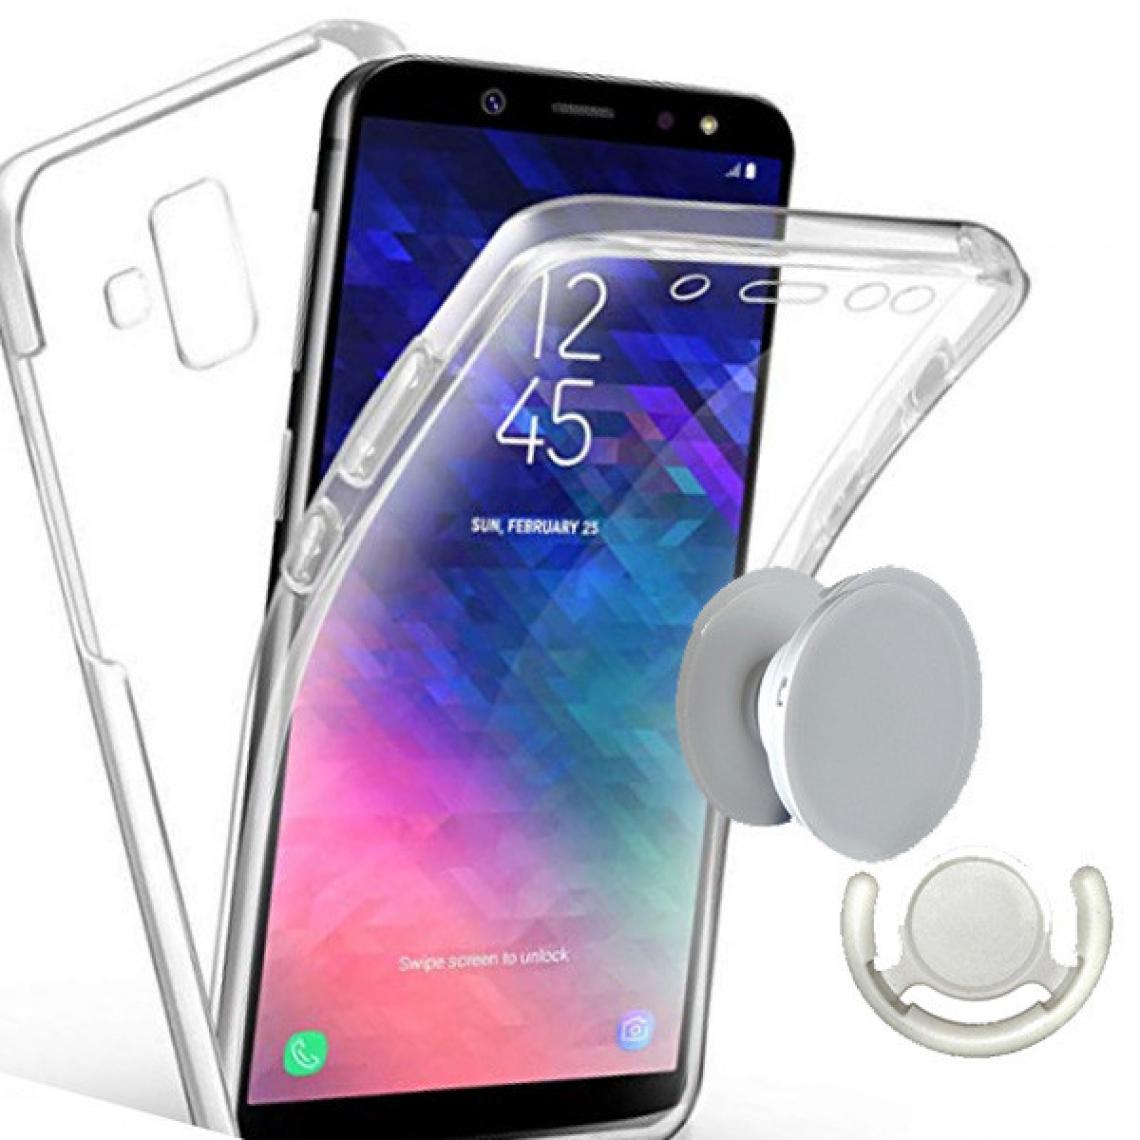 Phonecare - Kit Coque 3x1 360°Impact Protection + 1 PopSocket + 1 Support PopSocket Blanc - Impact Protection - Samsung A20e - Coque, étui smartphone